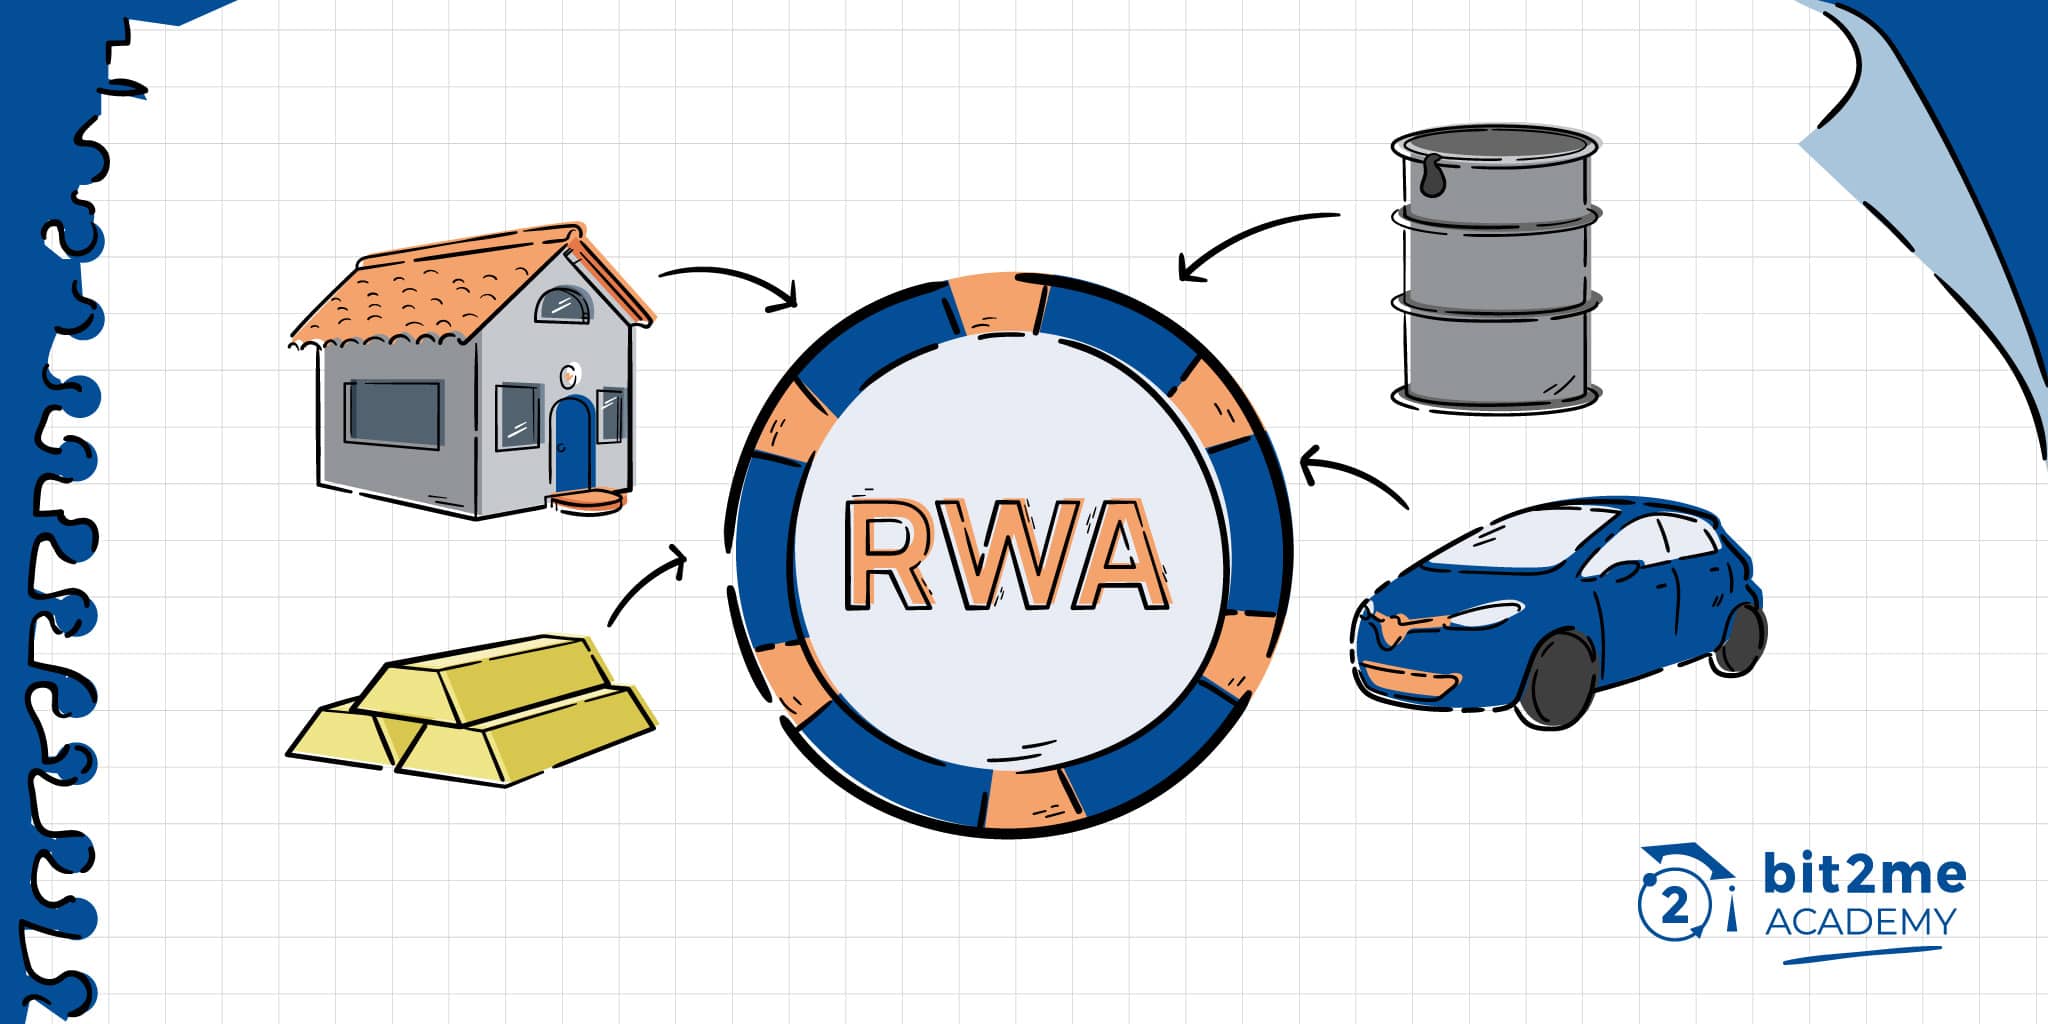 ¿Qué son los Real World Assets o RWA?